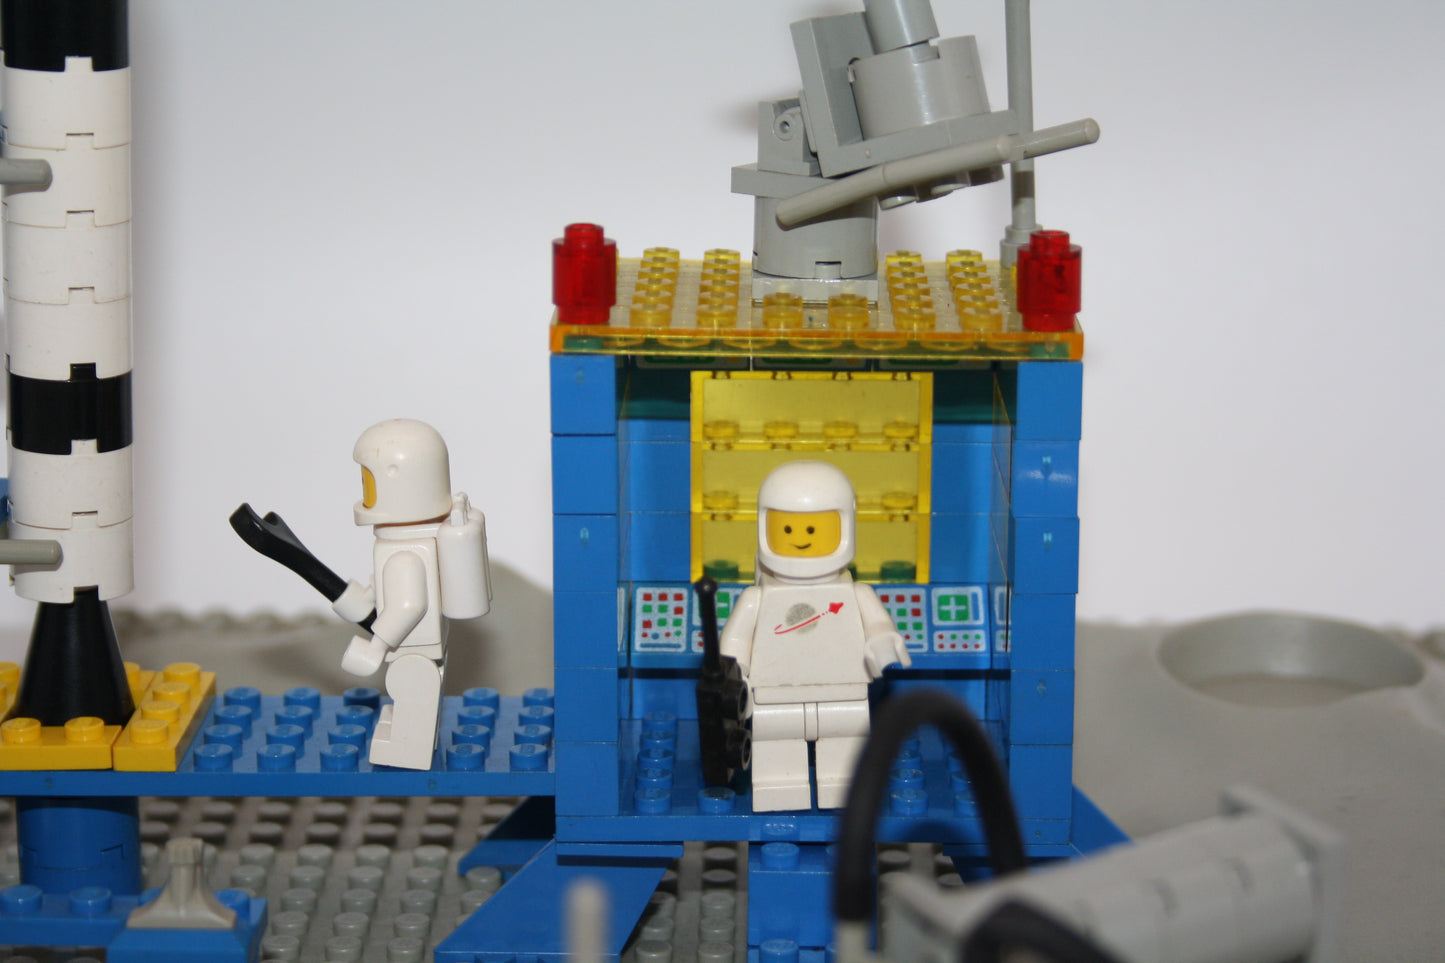 LEGO® - Set 920 Classic Space Alpha/Raketen-Basis - Space/Weltraum